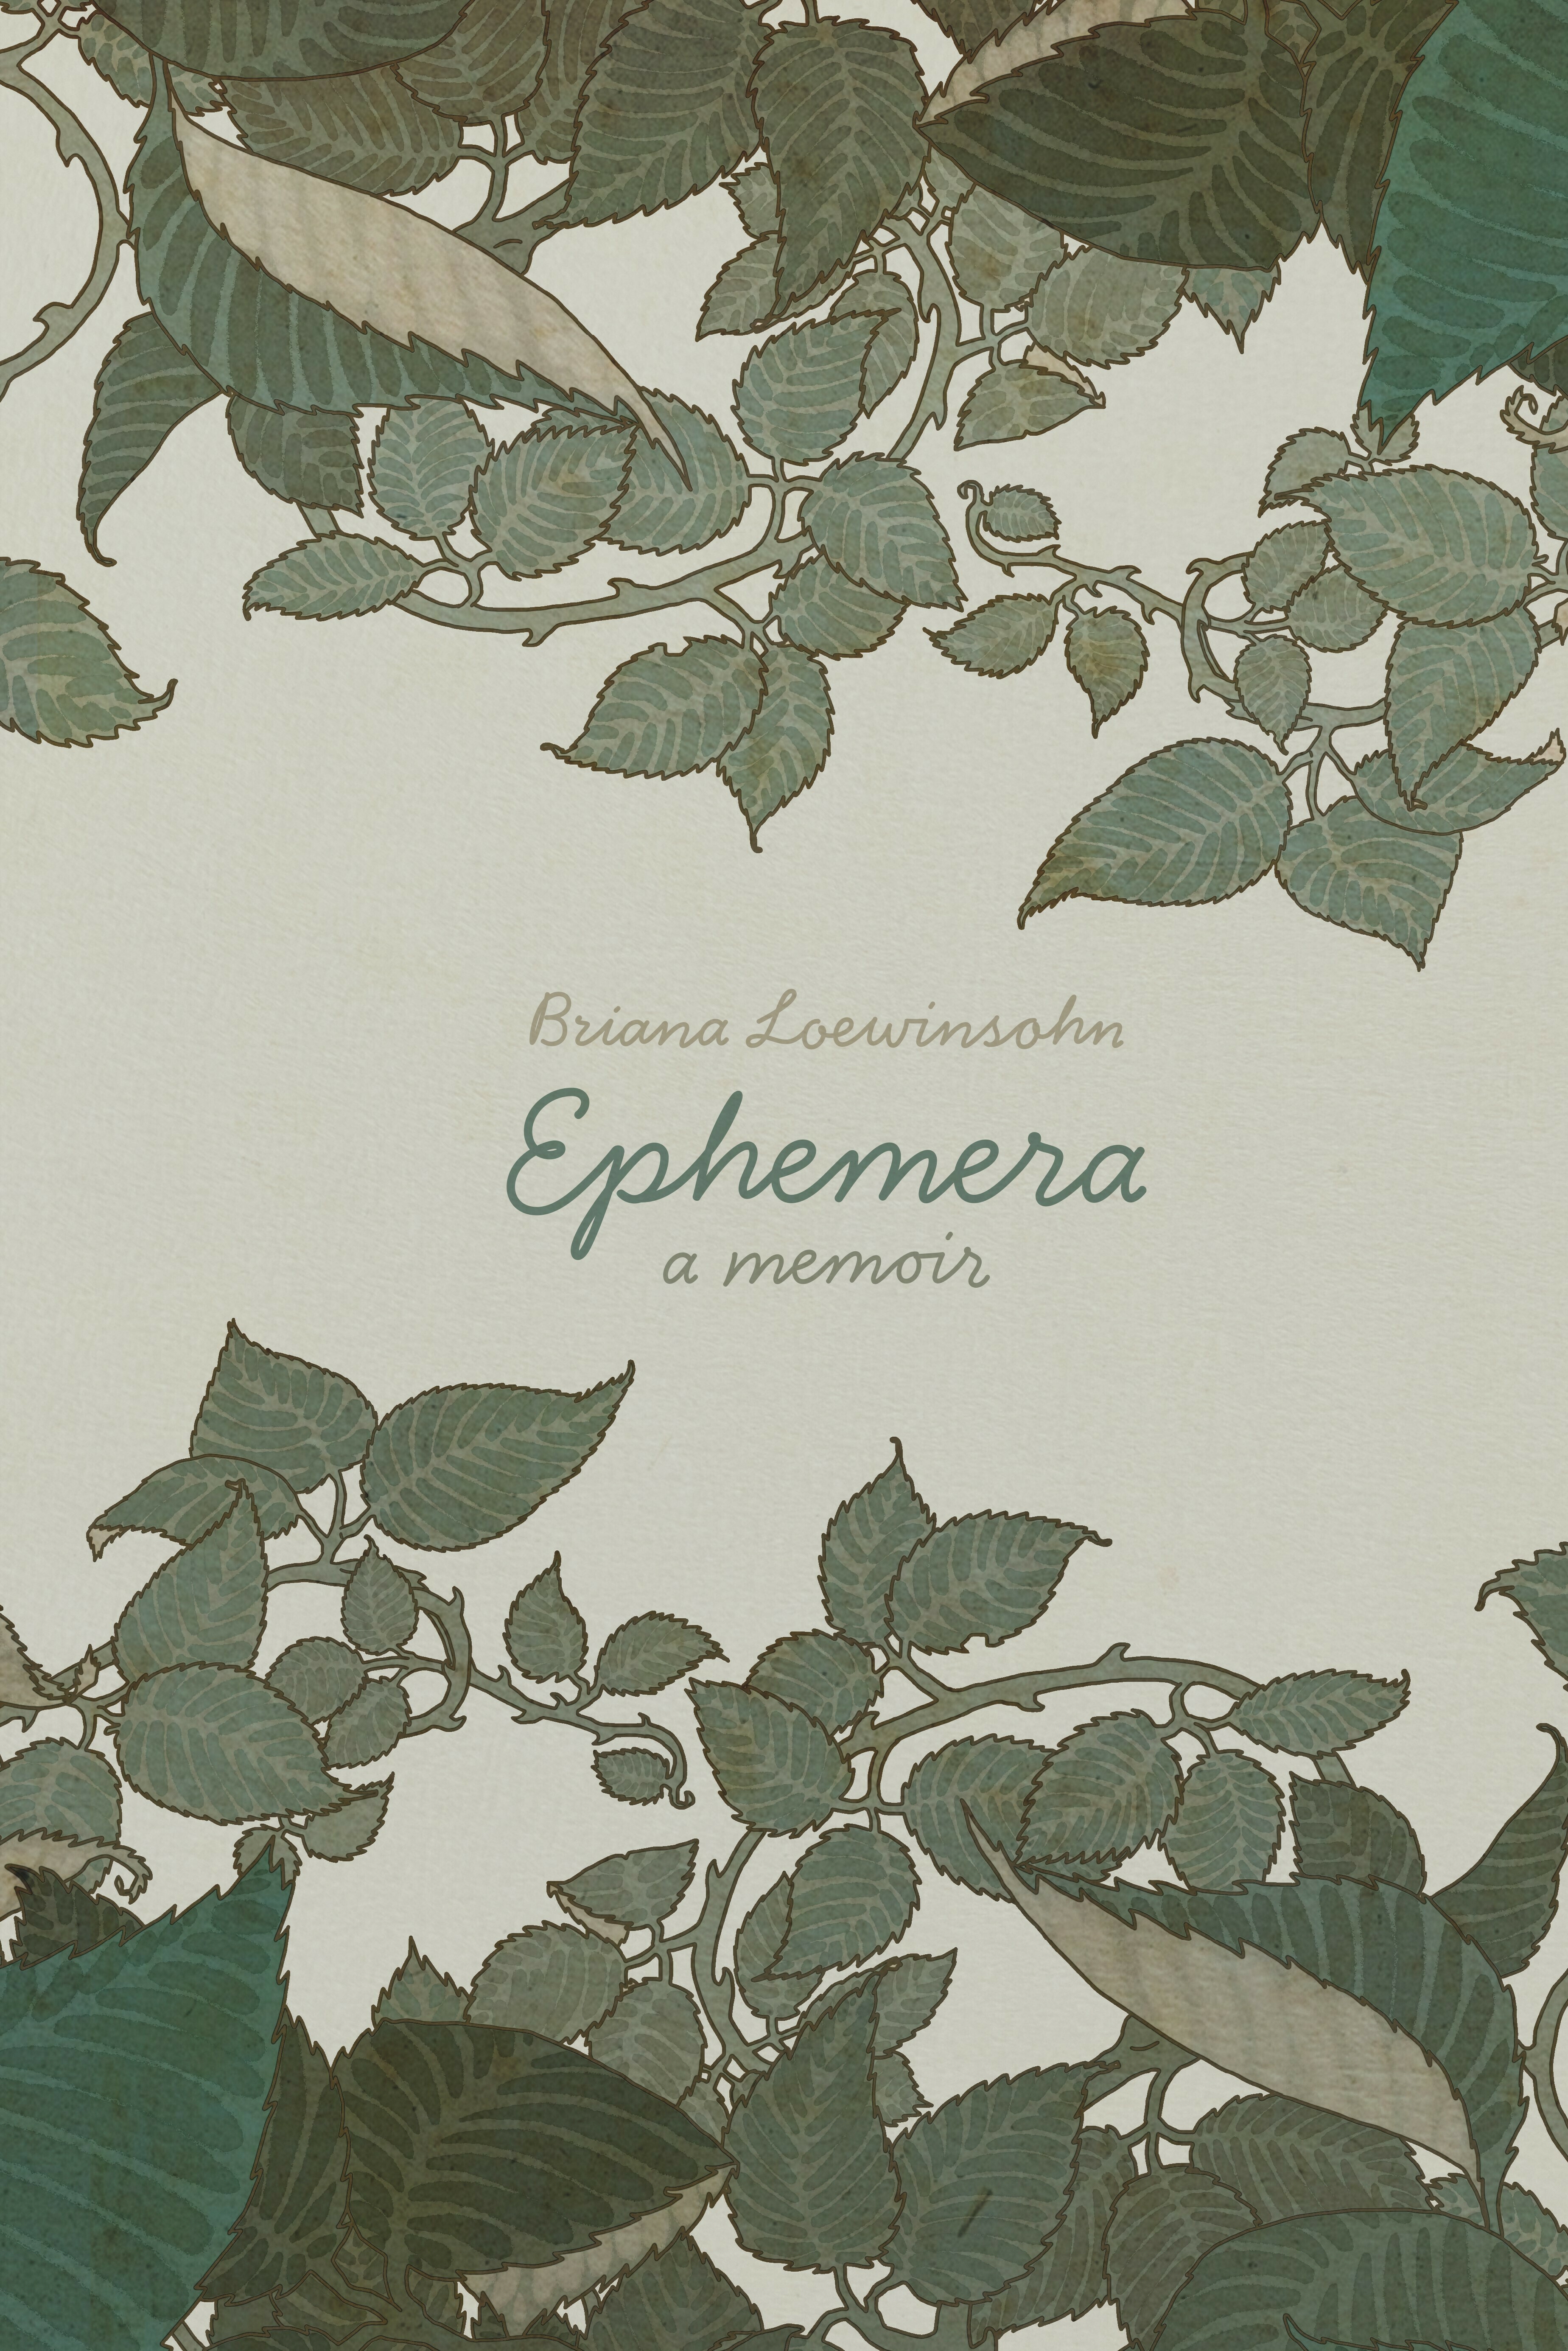 Ephemera: A Memoir by Briana Loewinsohn